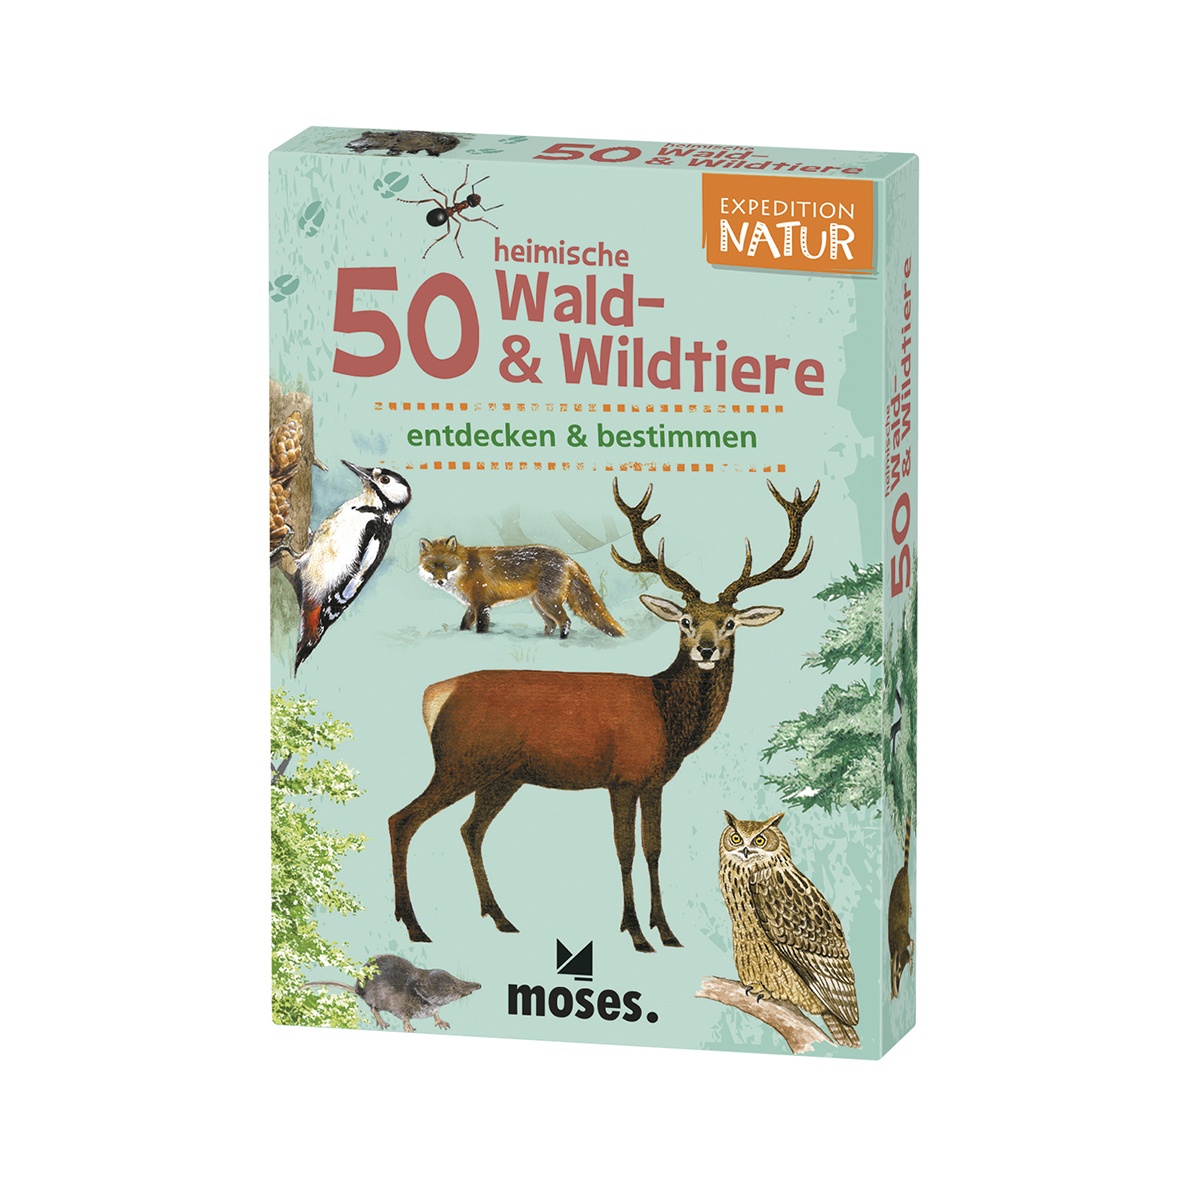 Expedition Natur - 50 heimische Wald- & Wildtiere moses